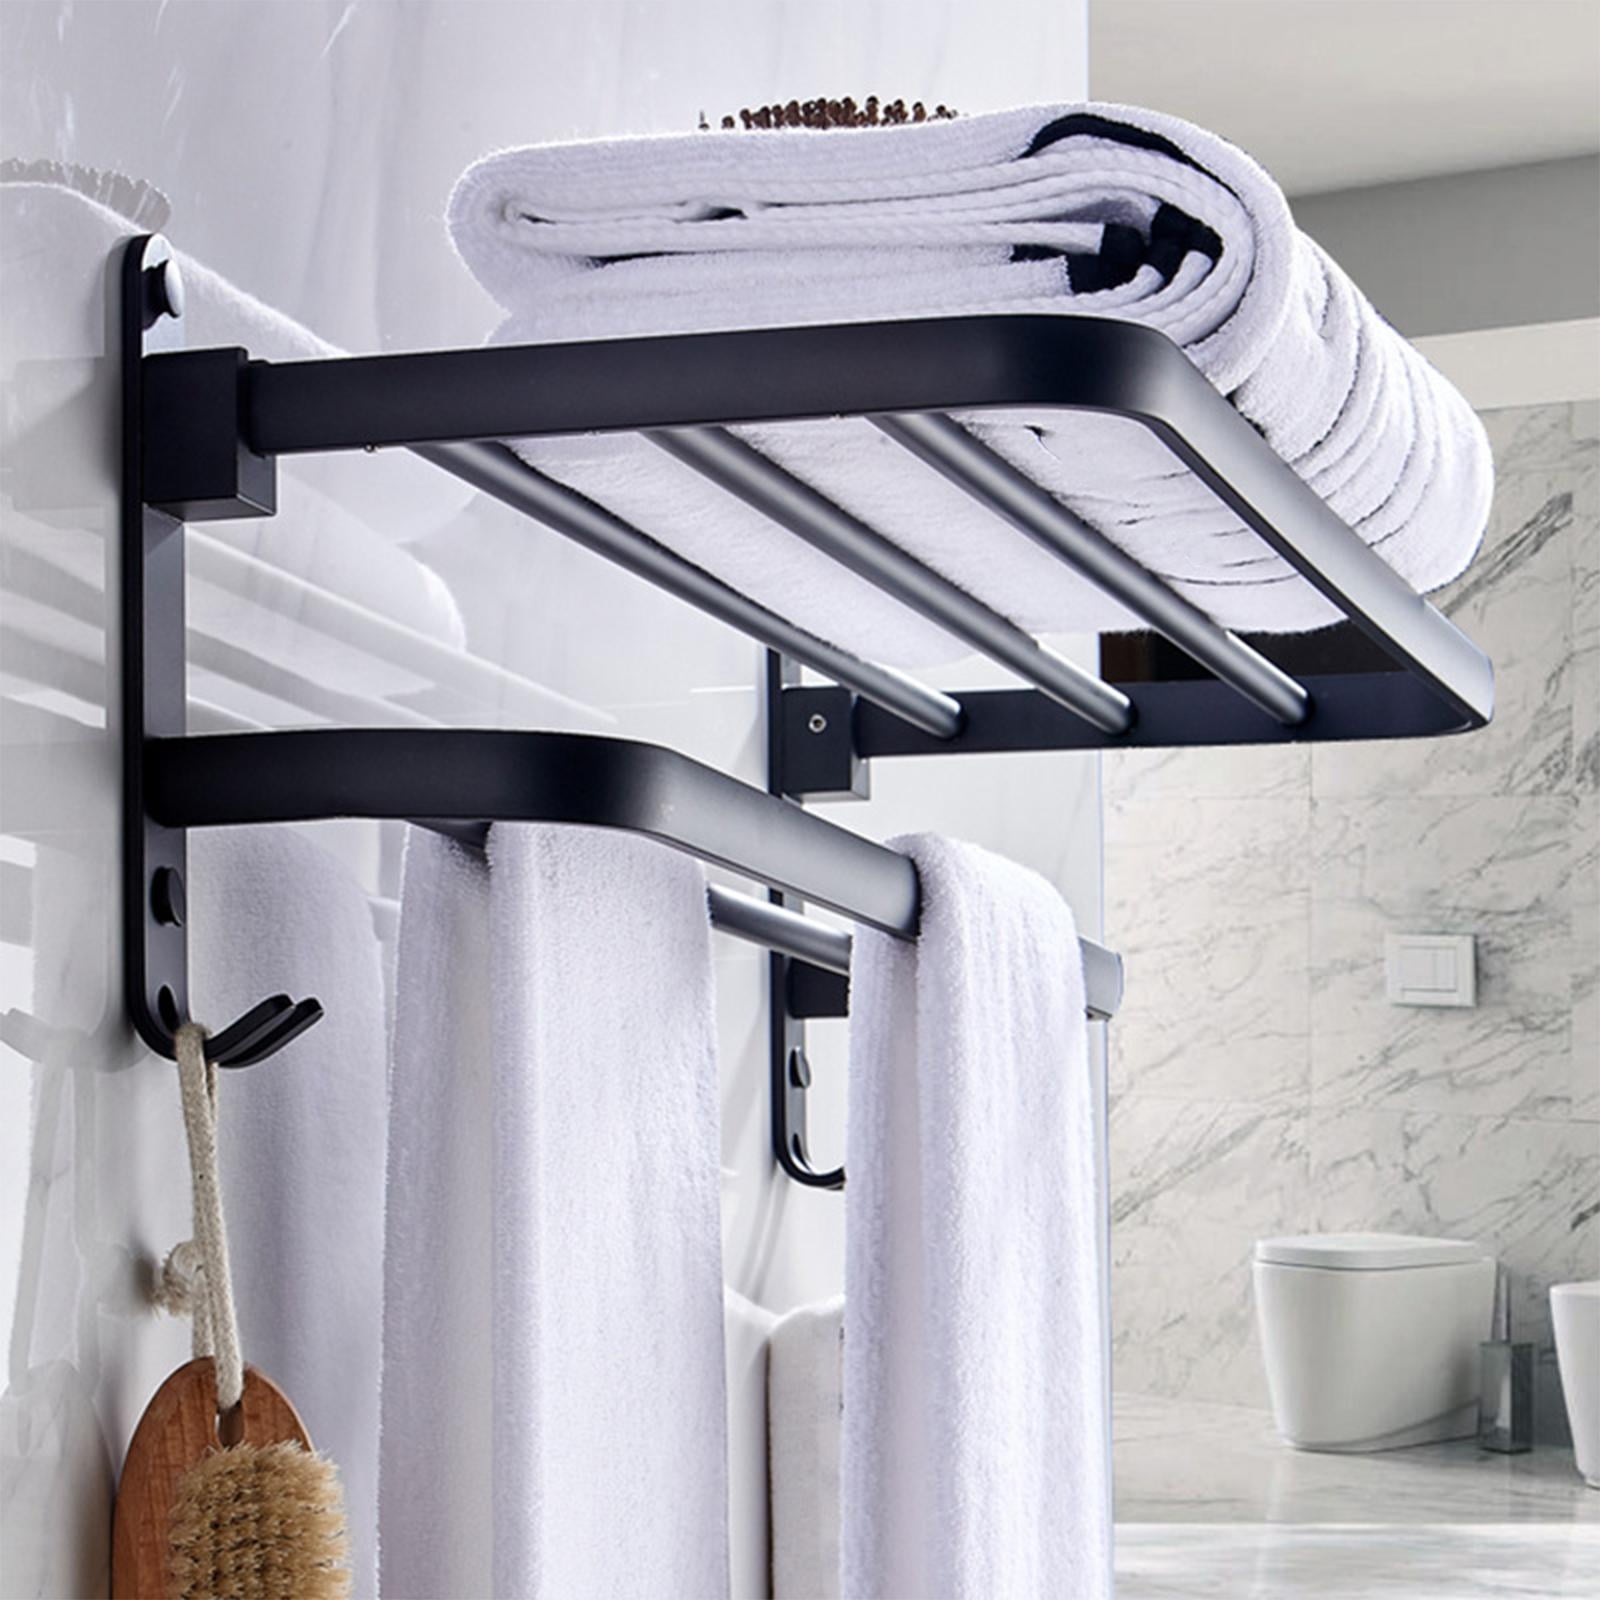 Stainless Steel Non-perforated Bathroom Shelf Hotel Bathroom Shelf